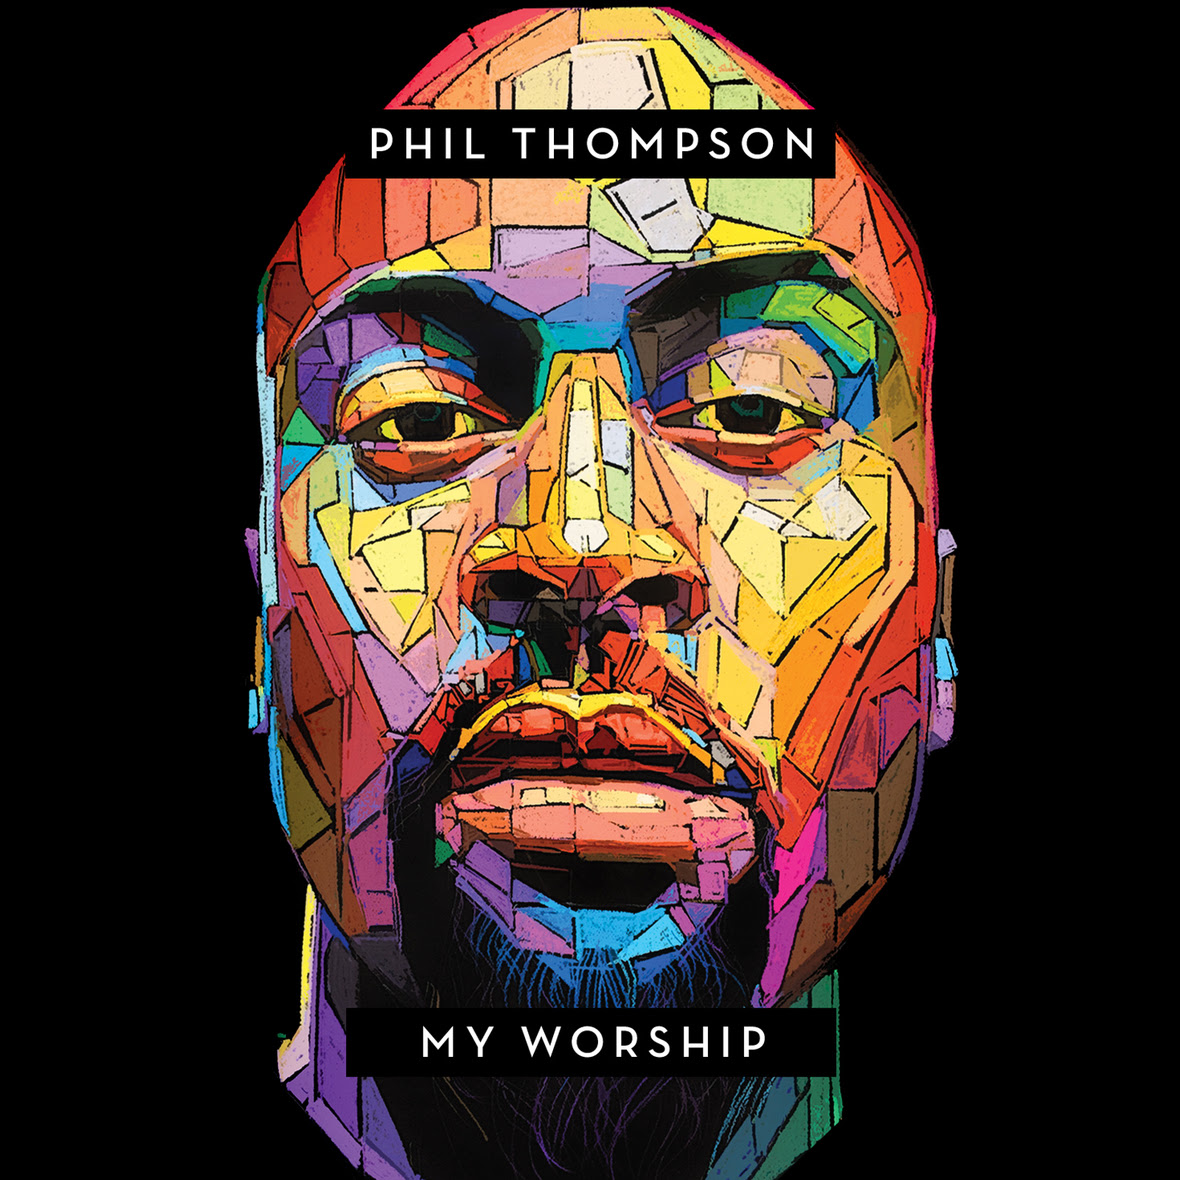 Phil Thompson_My Worship_Album